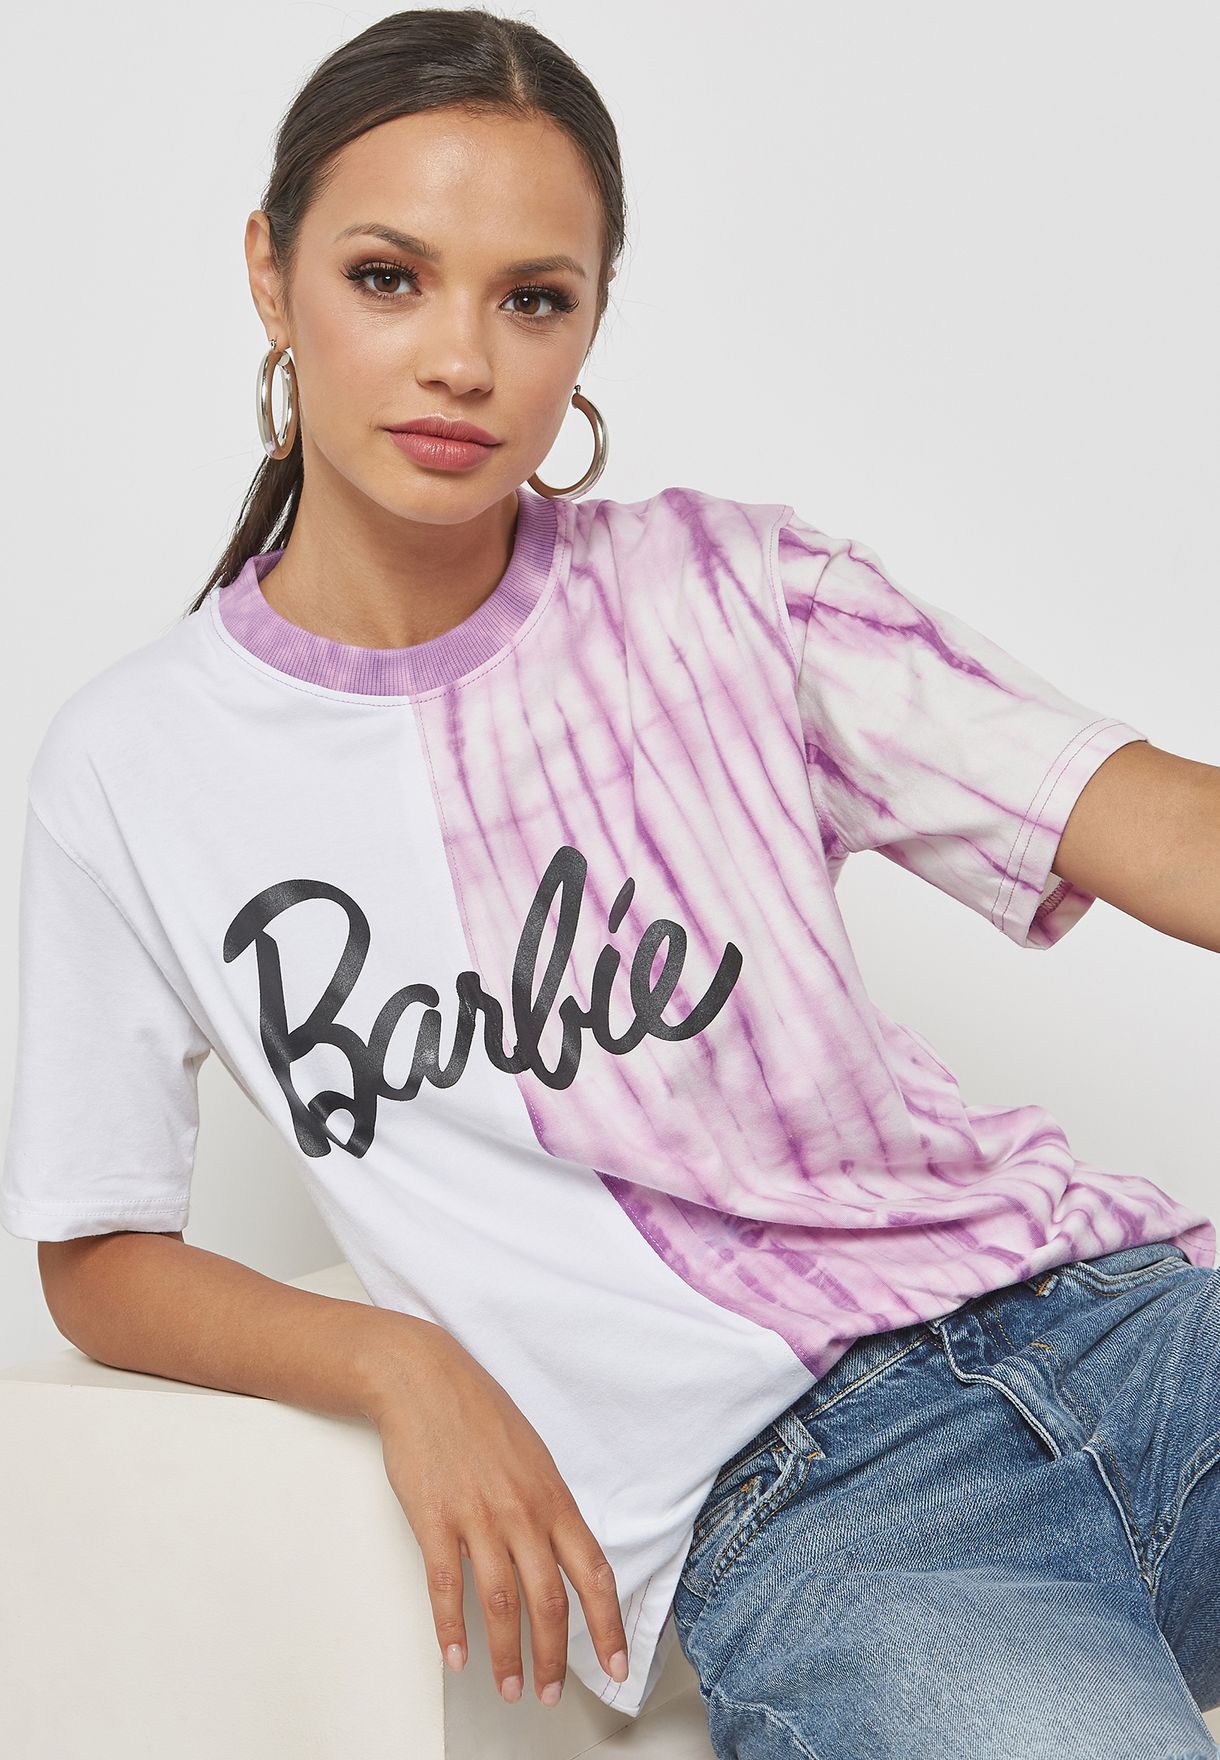 barbie tie dye shirt